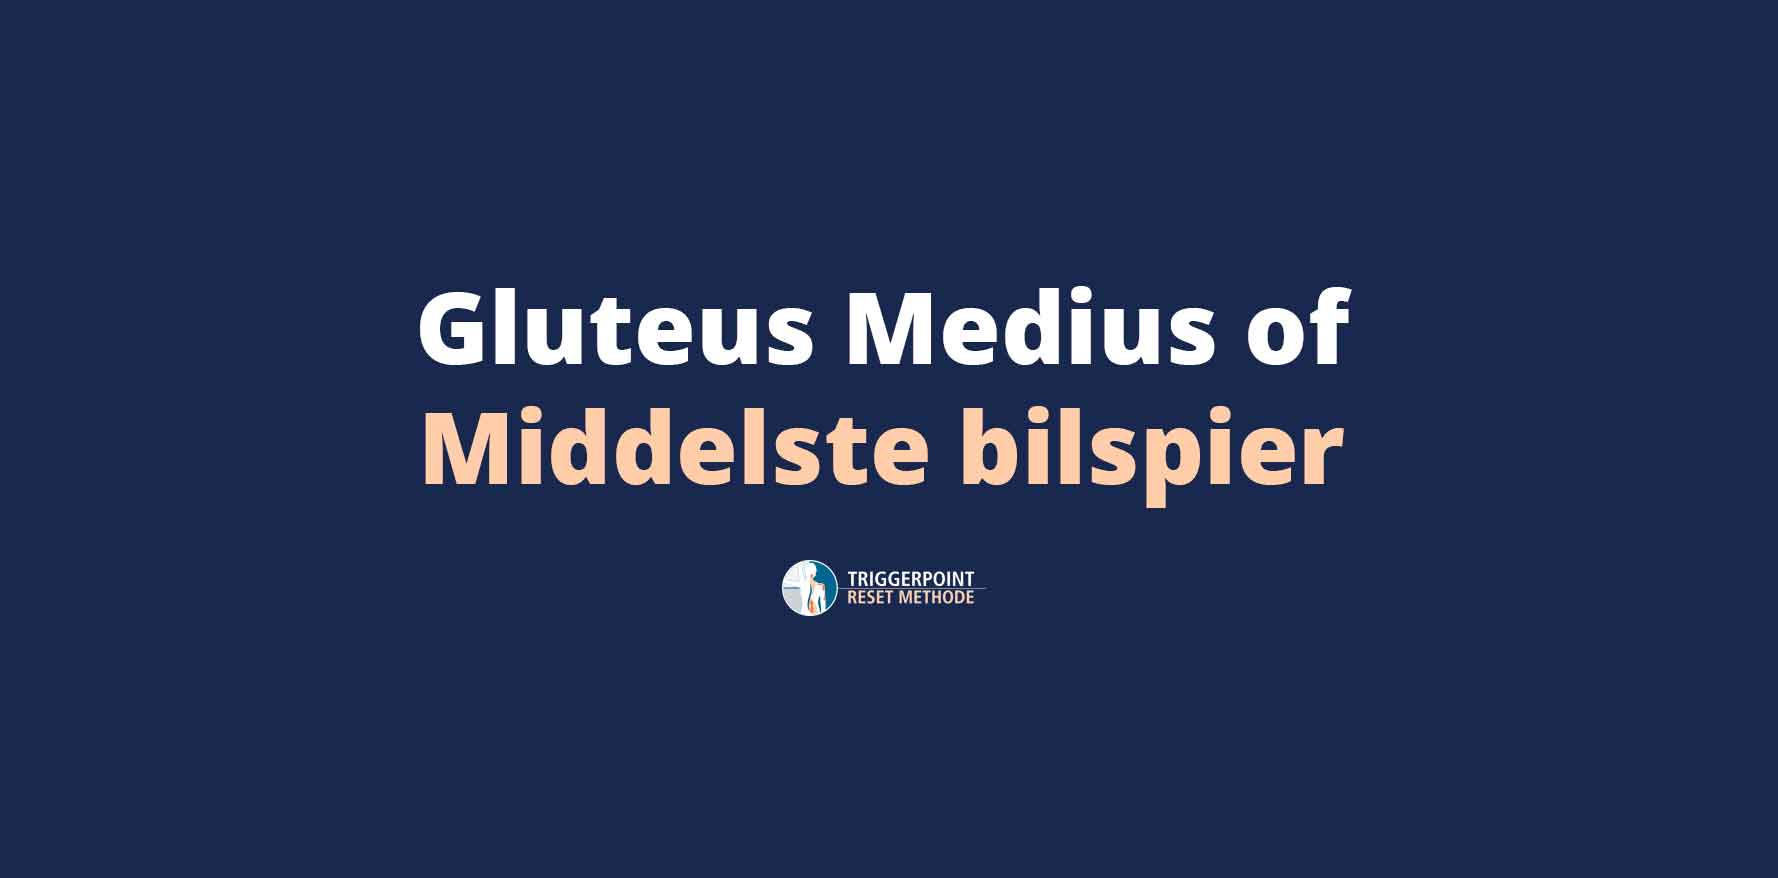 Gluteus medius of bilspier